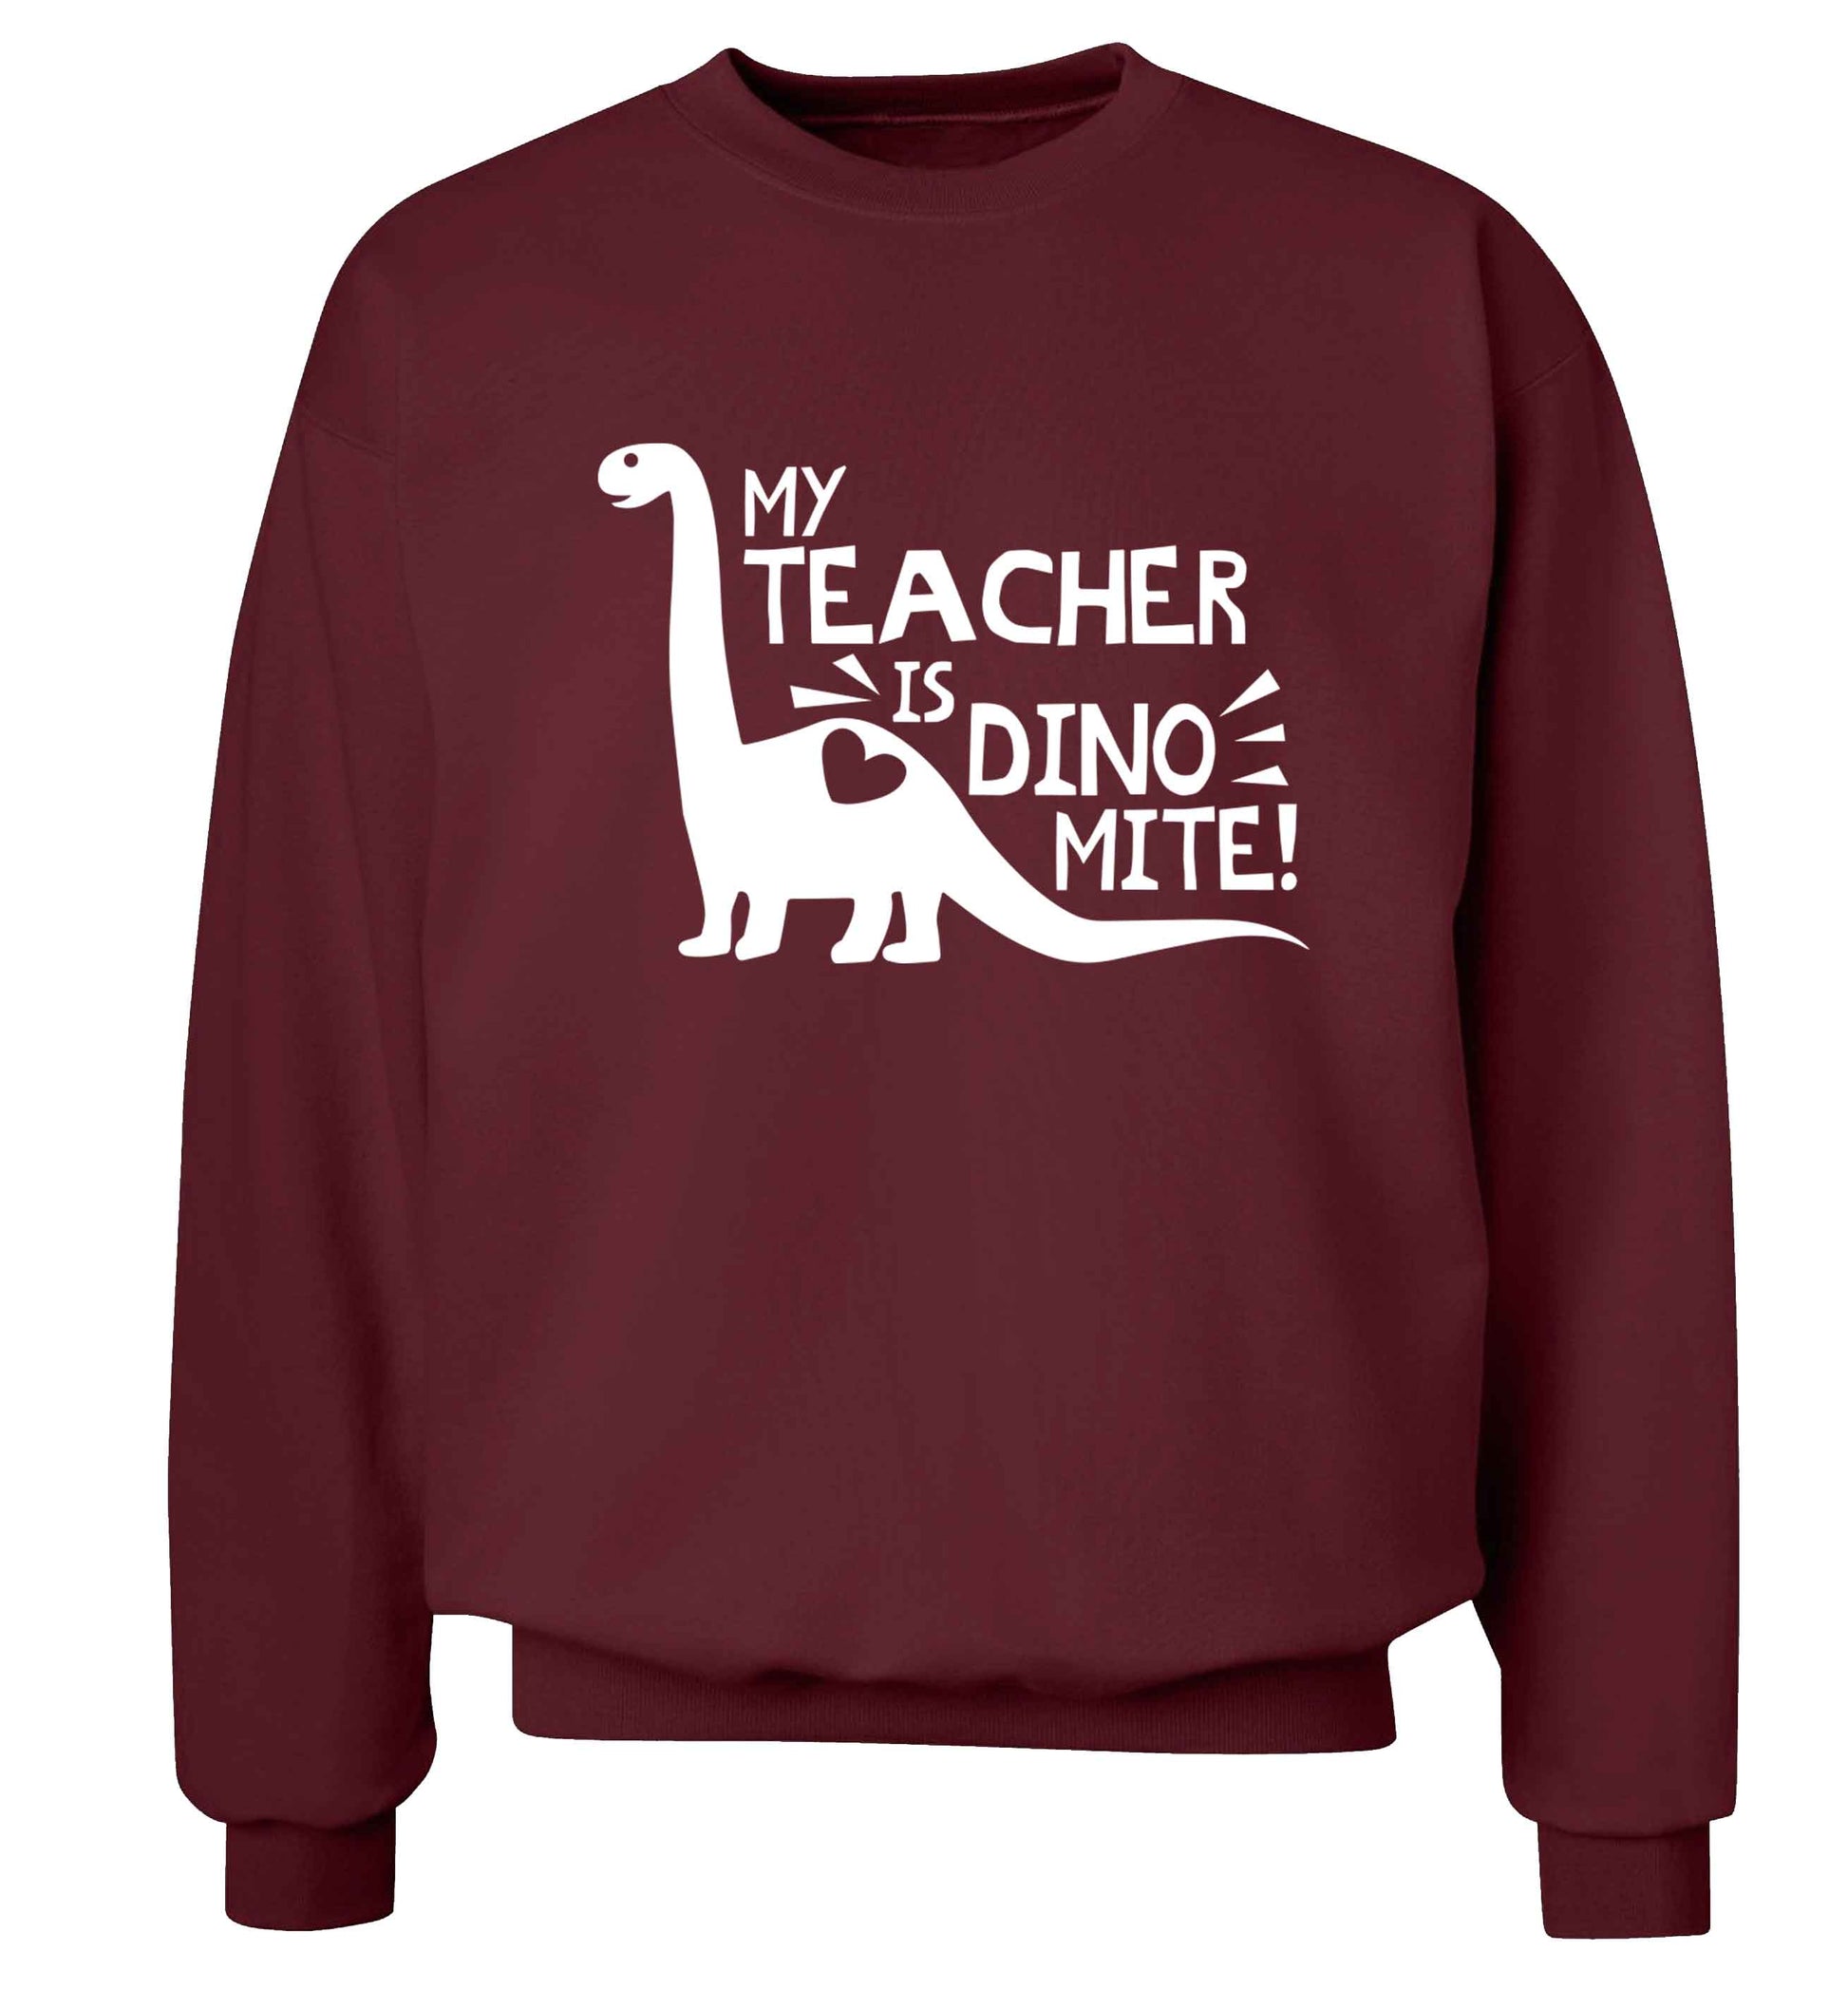 My teacher is dinomite! Adult's unisex maroon Sweater 2XL